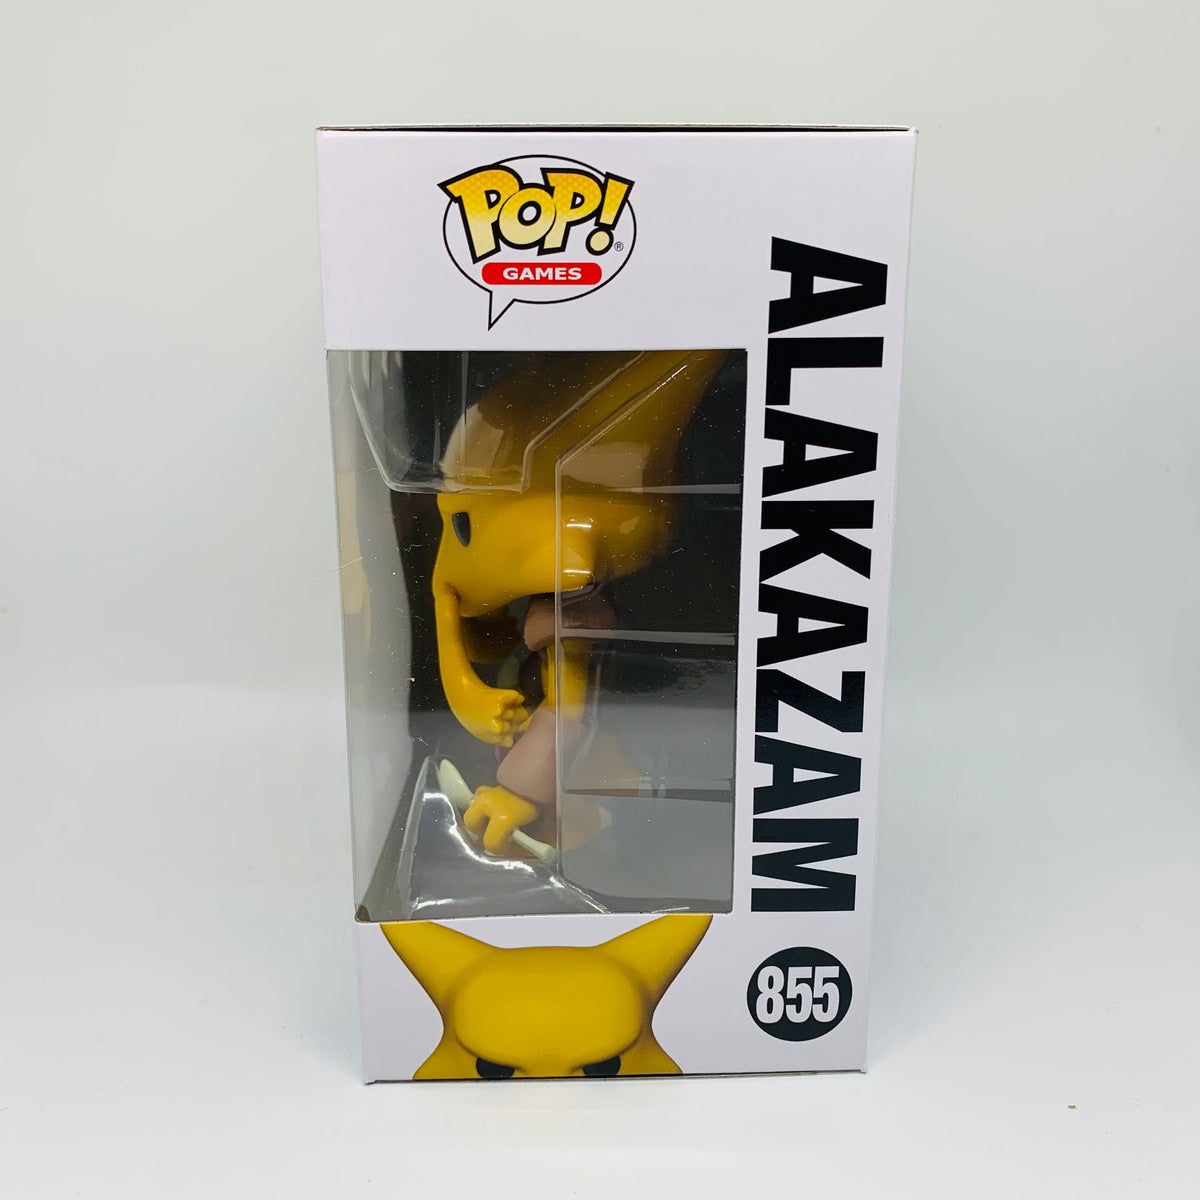 Funko Pop Alakazam 855 (Pokemon) (Games) - Arena Games - Loja Geek